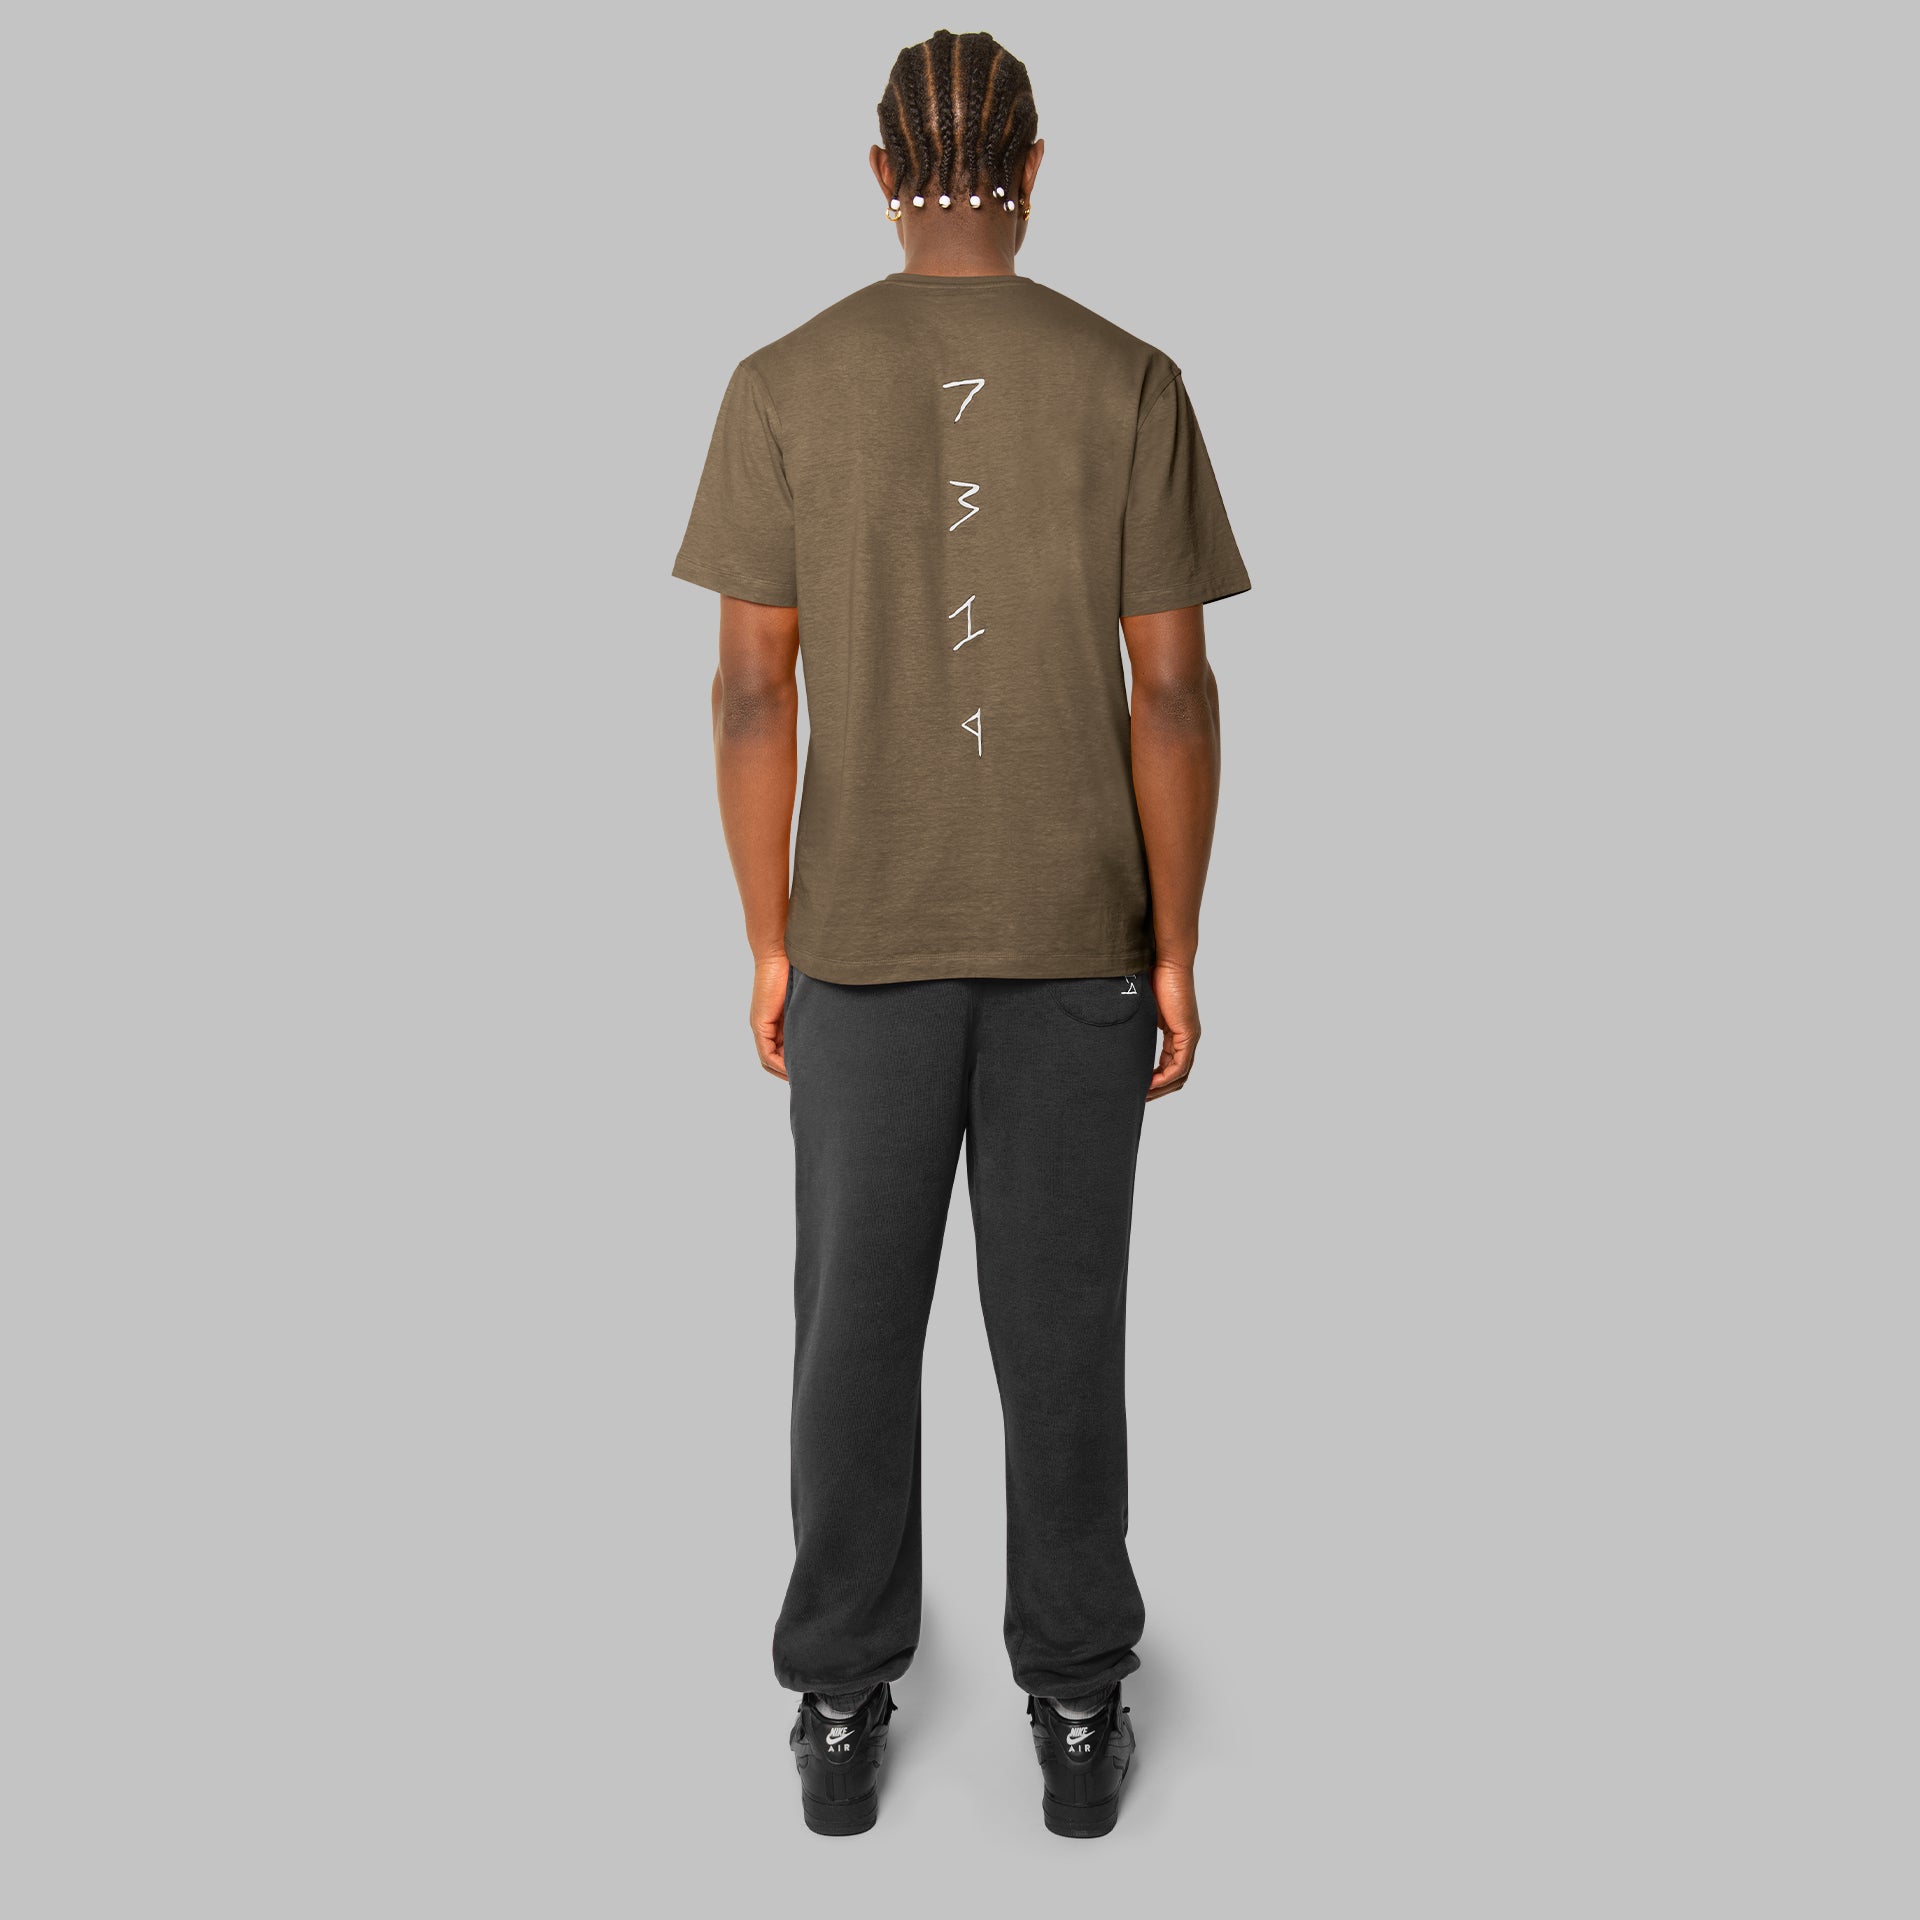 Olive green hemp t-shirt with black hemp joggers. White 7319 detailing down spine of hemp t-shirt. Ethical street style.